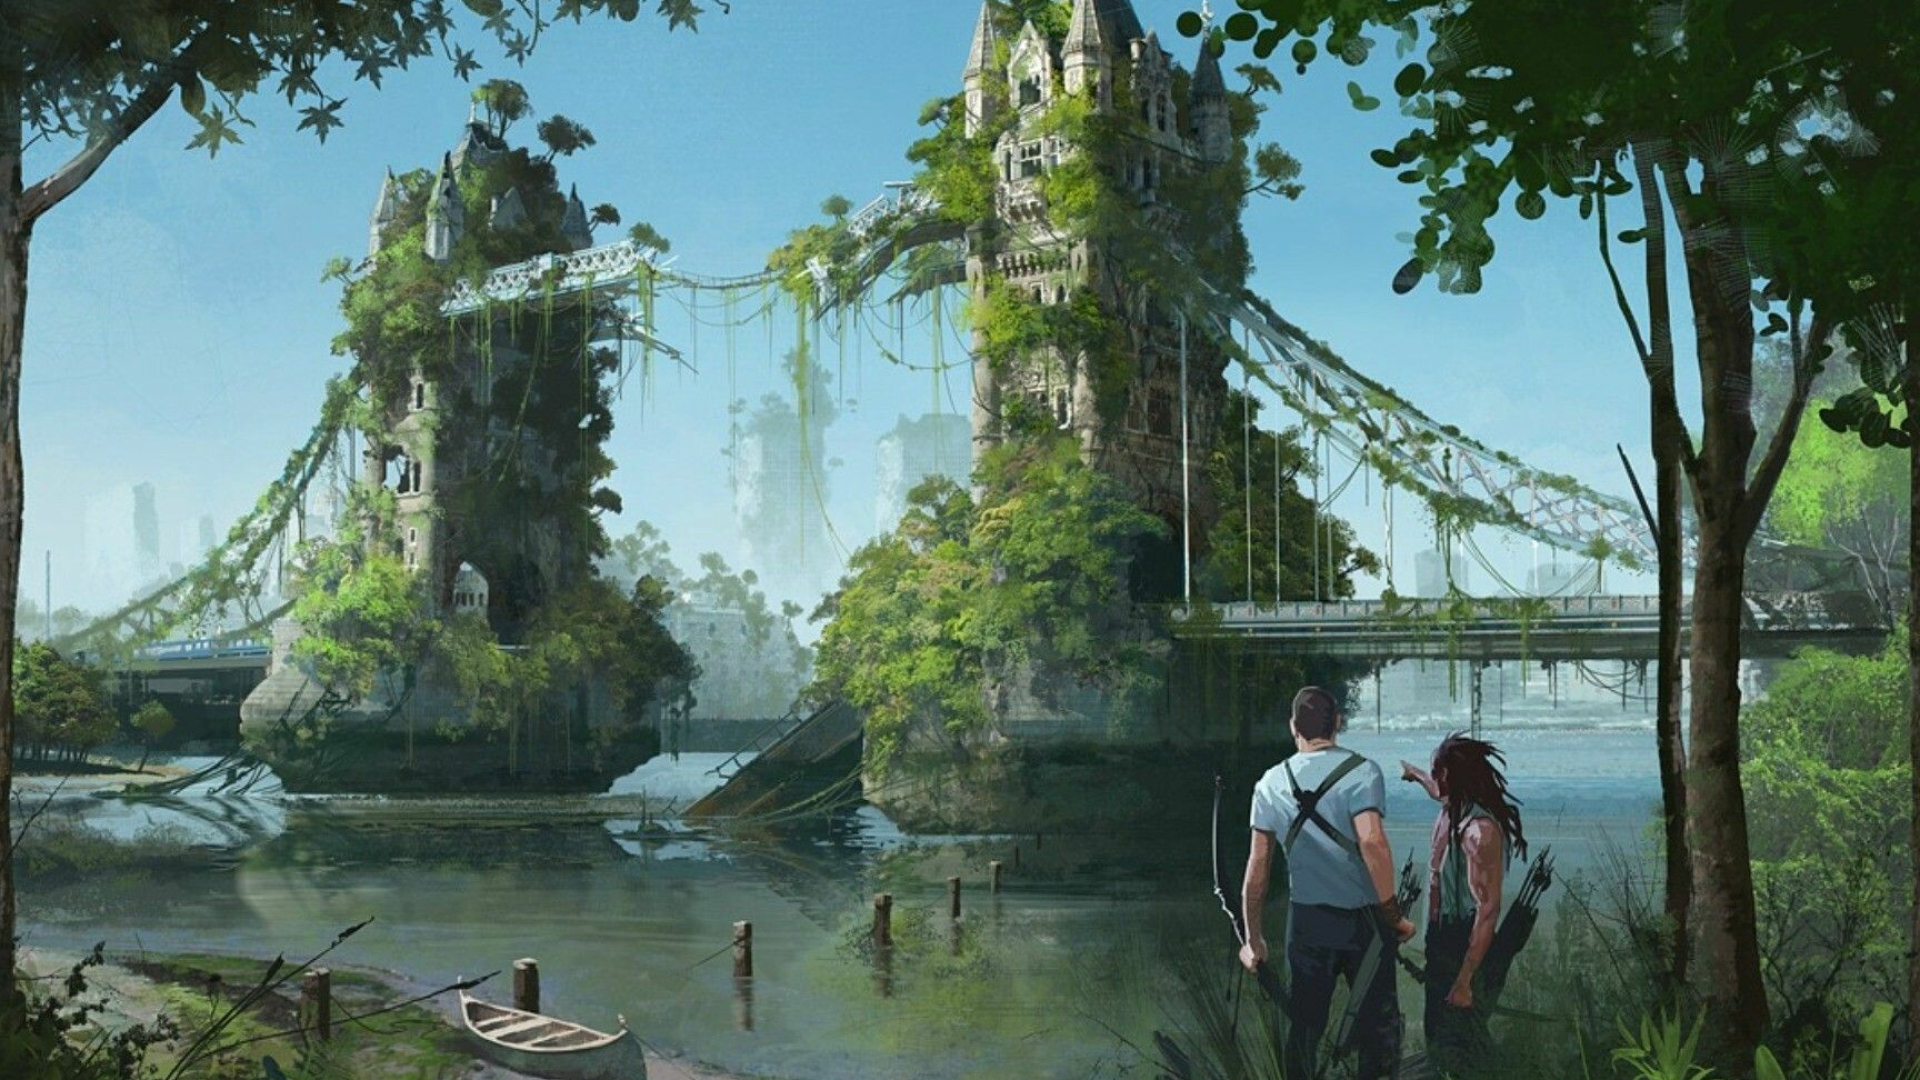 Post-apocalypse: The end of the world, Survivors, Tower Bridge, London. 1920x1080 Full HD Wallpaper.